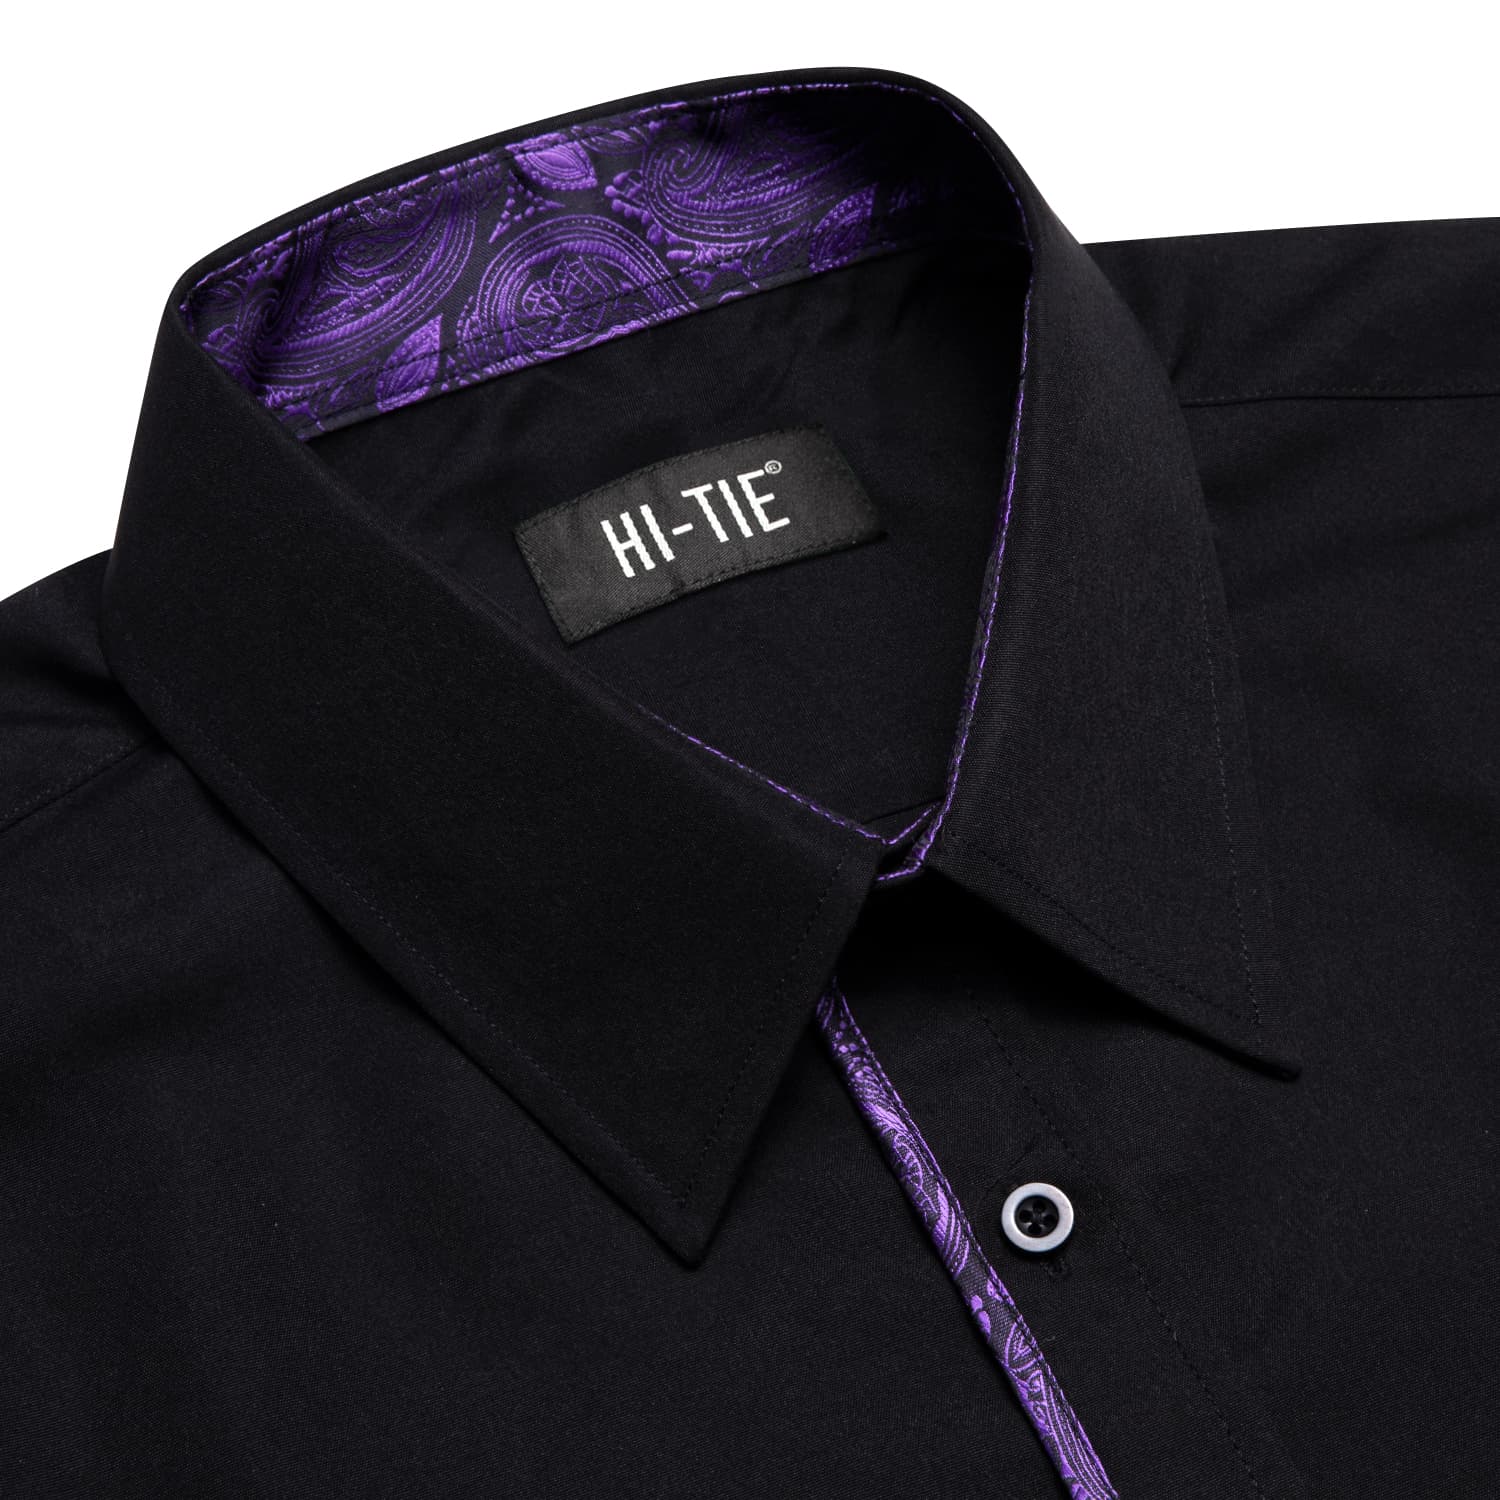 Hi-Tie Black Shirt with Purple Jacquard Collar Solid Shirt